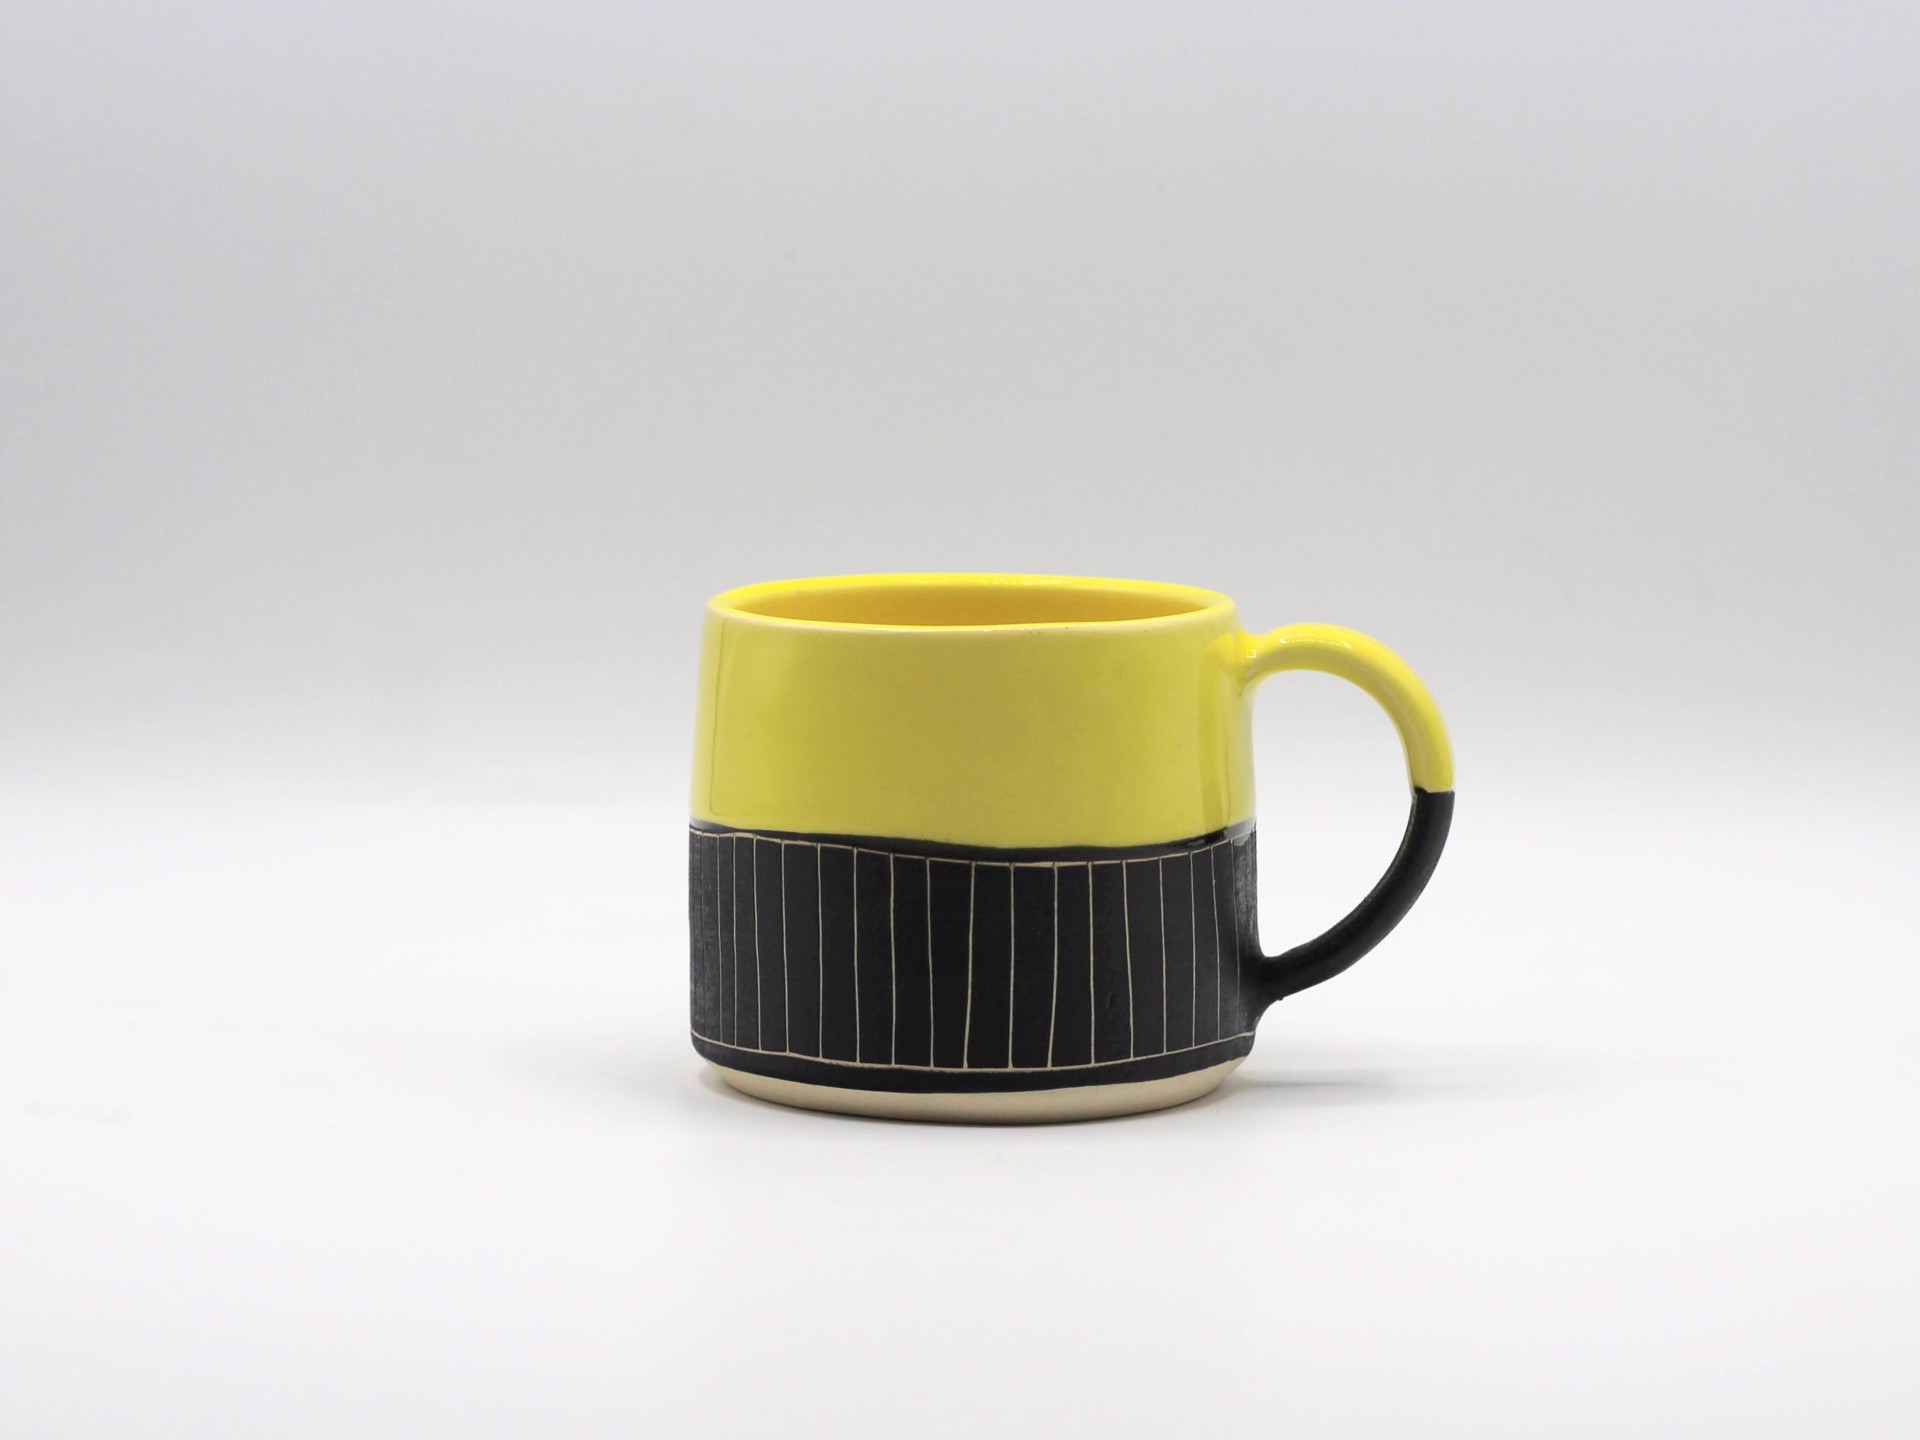 B&W Geometric w/ Yellow Glaze Mug by Kara Lovell